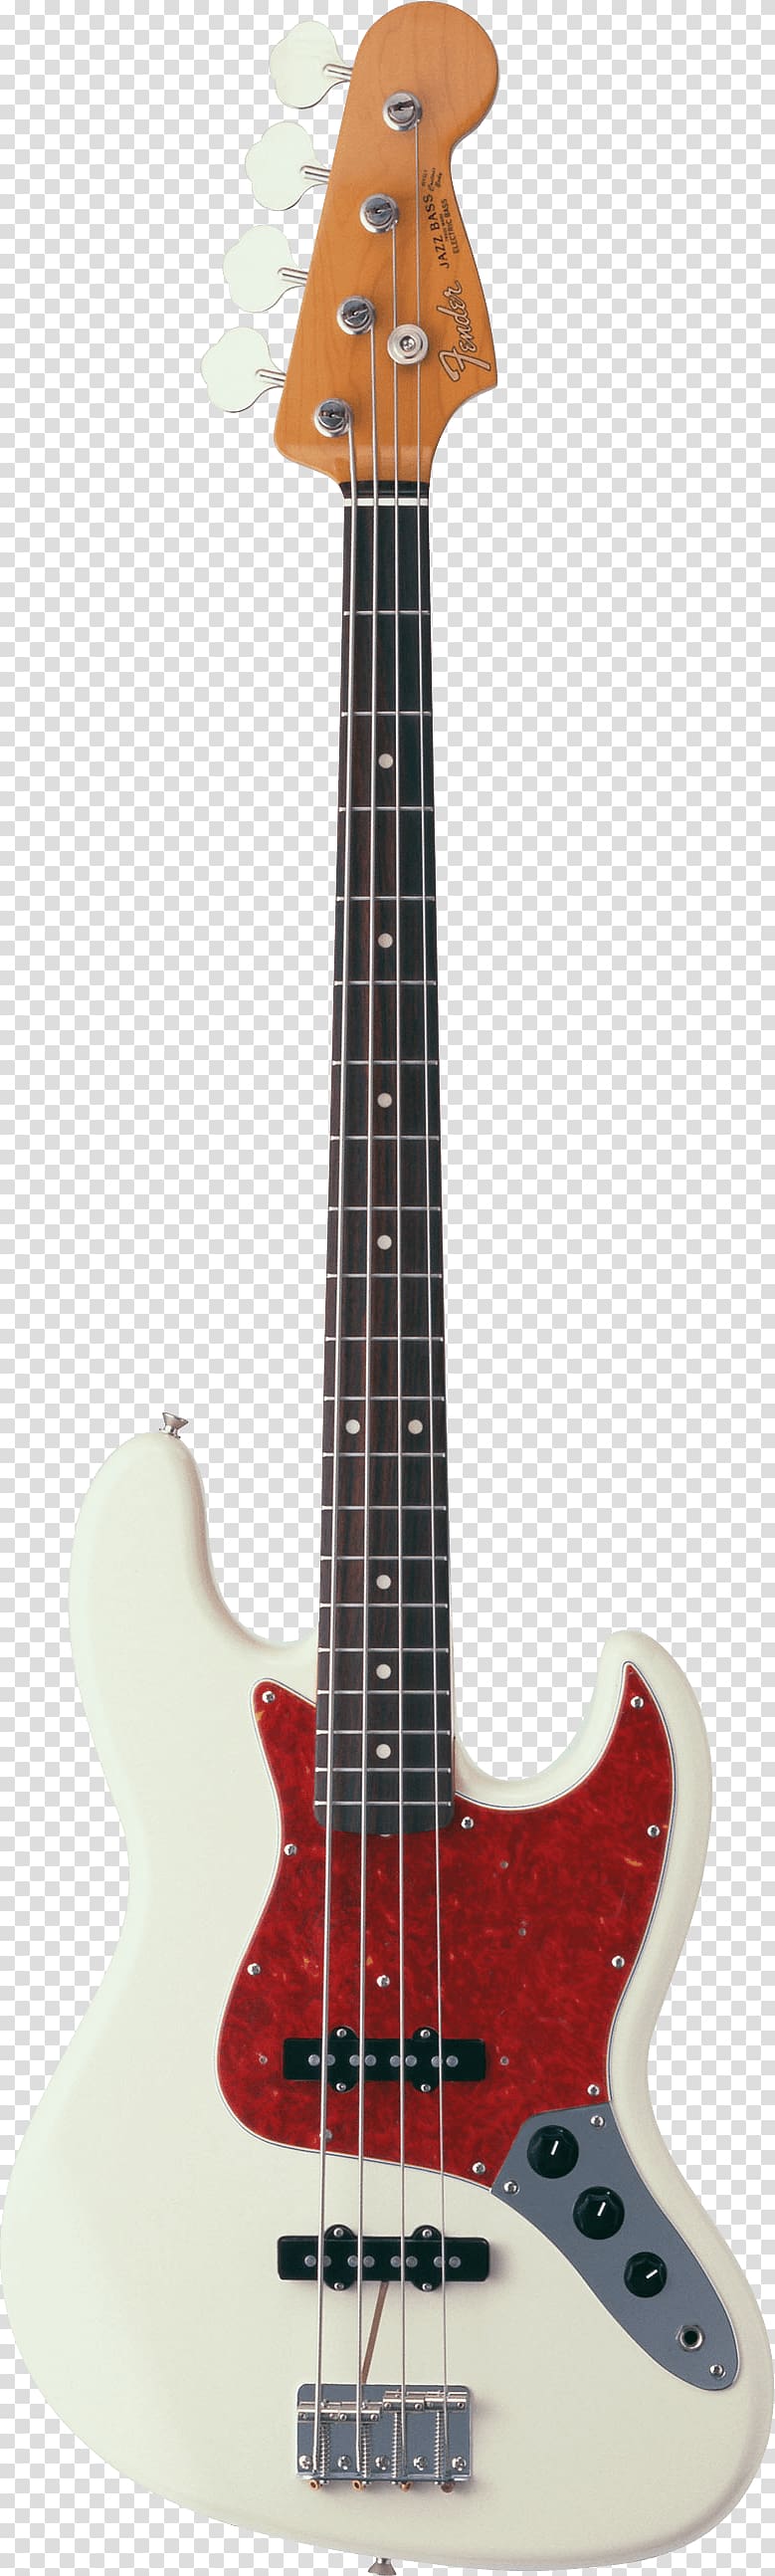 white bass guitar illustration, Fender Jazz Bass Guitar transparent background PNG clipart